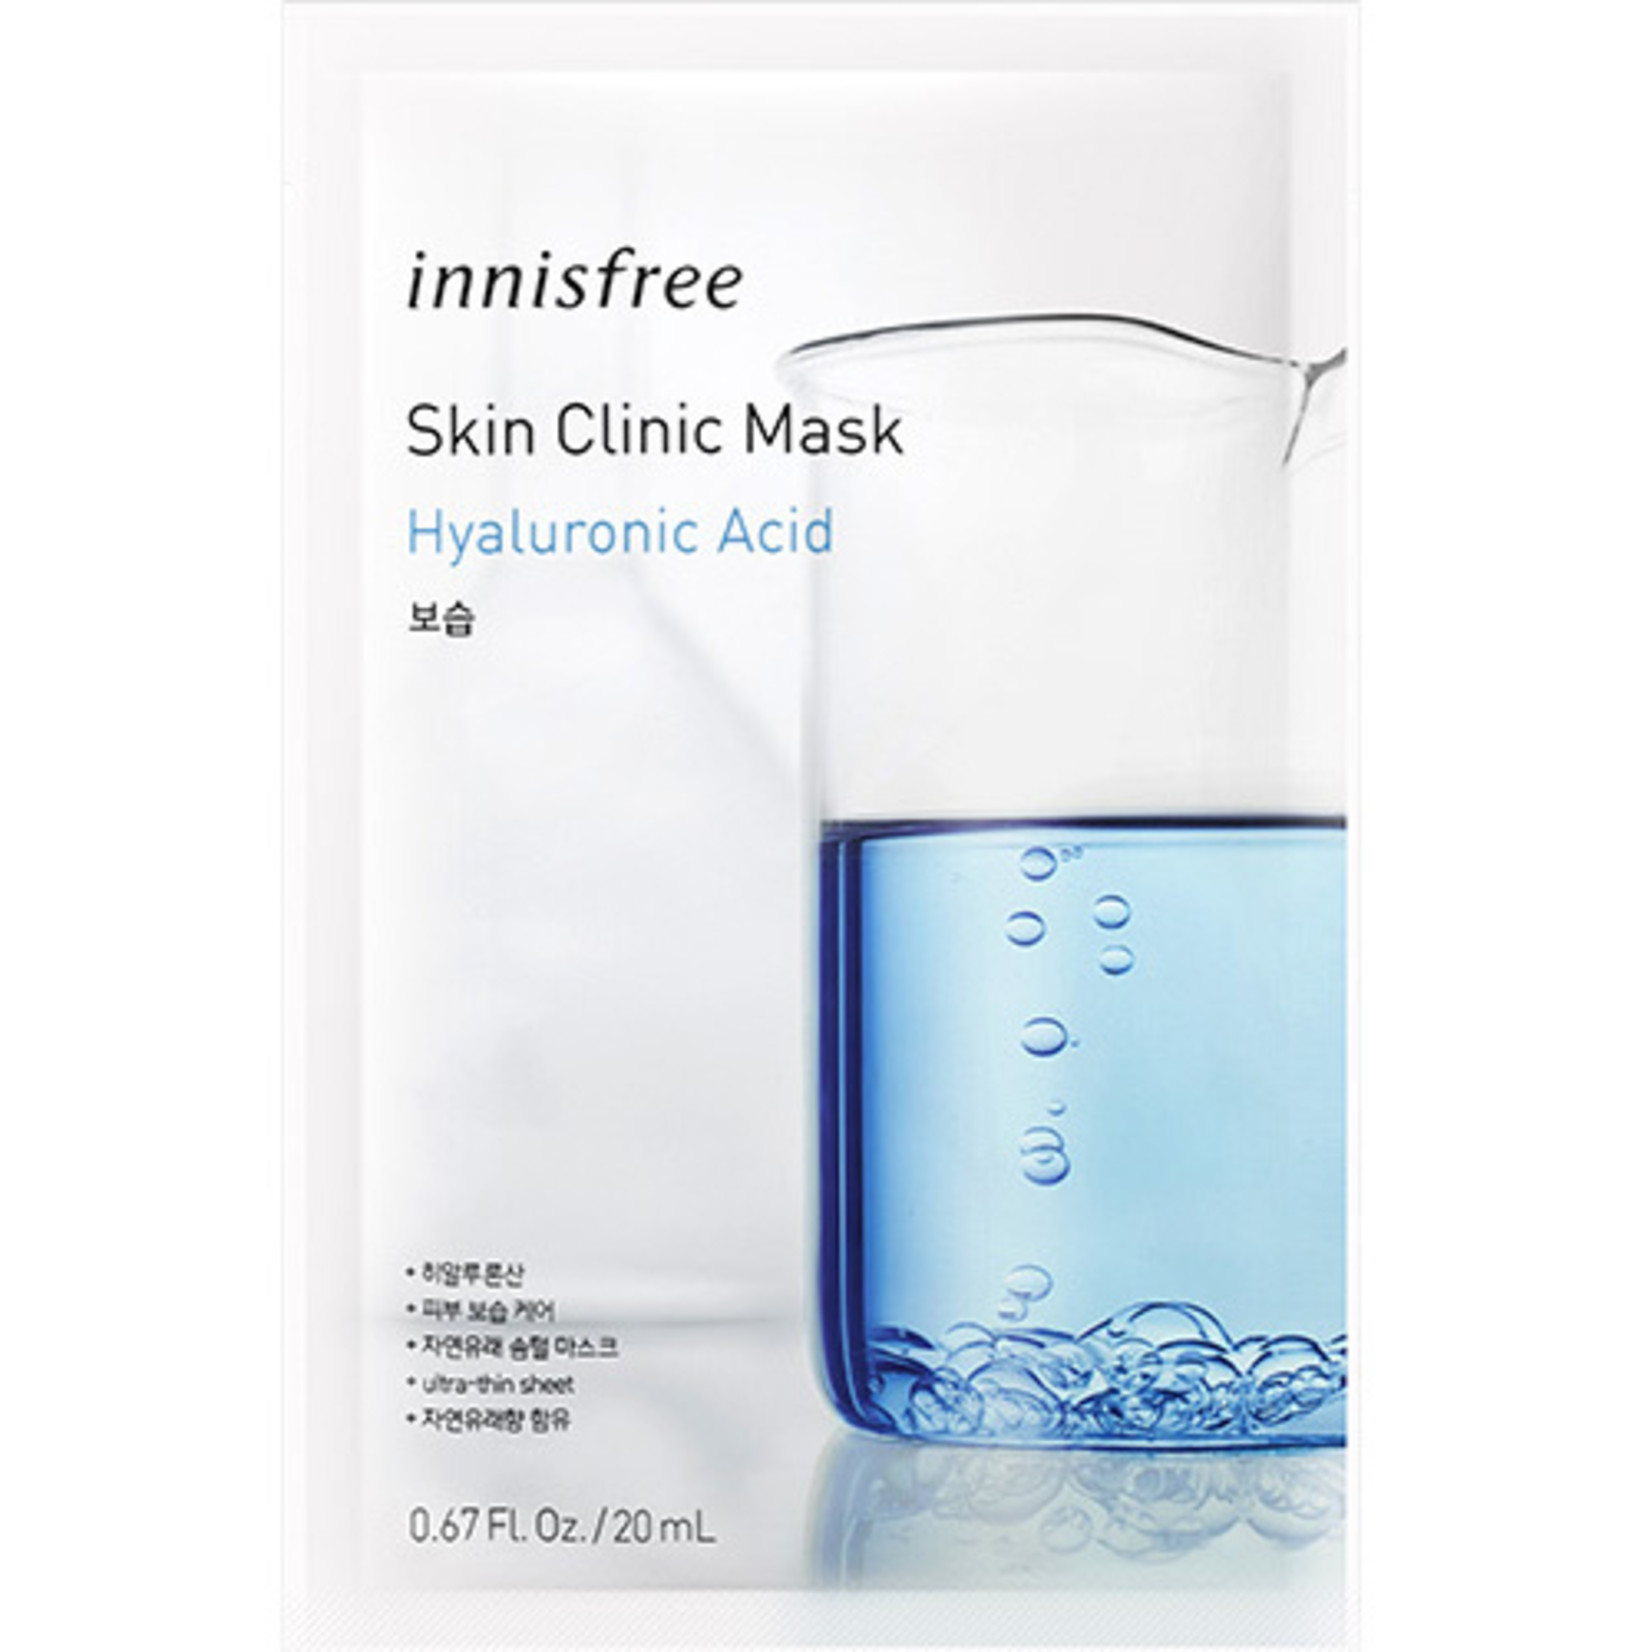 innisfree Skin Clinic Mask Hyaluronic Acid (Moisturizing)